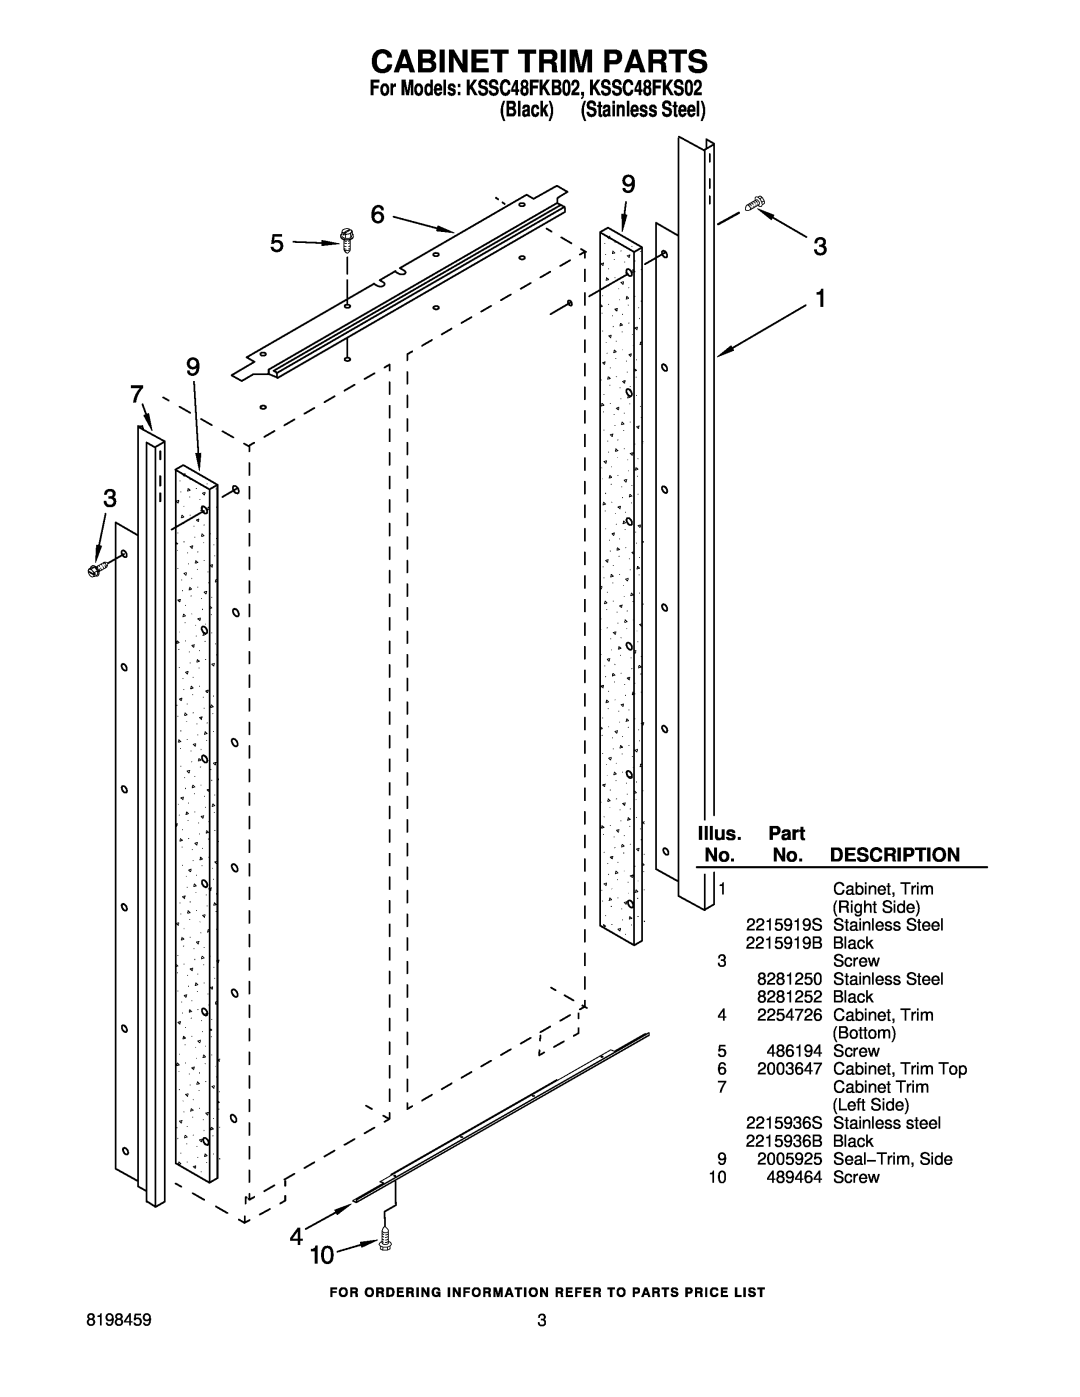 KitchenAid manual Cabinet Trim Parts, For Models KSSC48FKB02, KSSC48FKS02 Black Stainless Steel, Illus, Description 